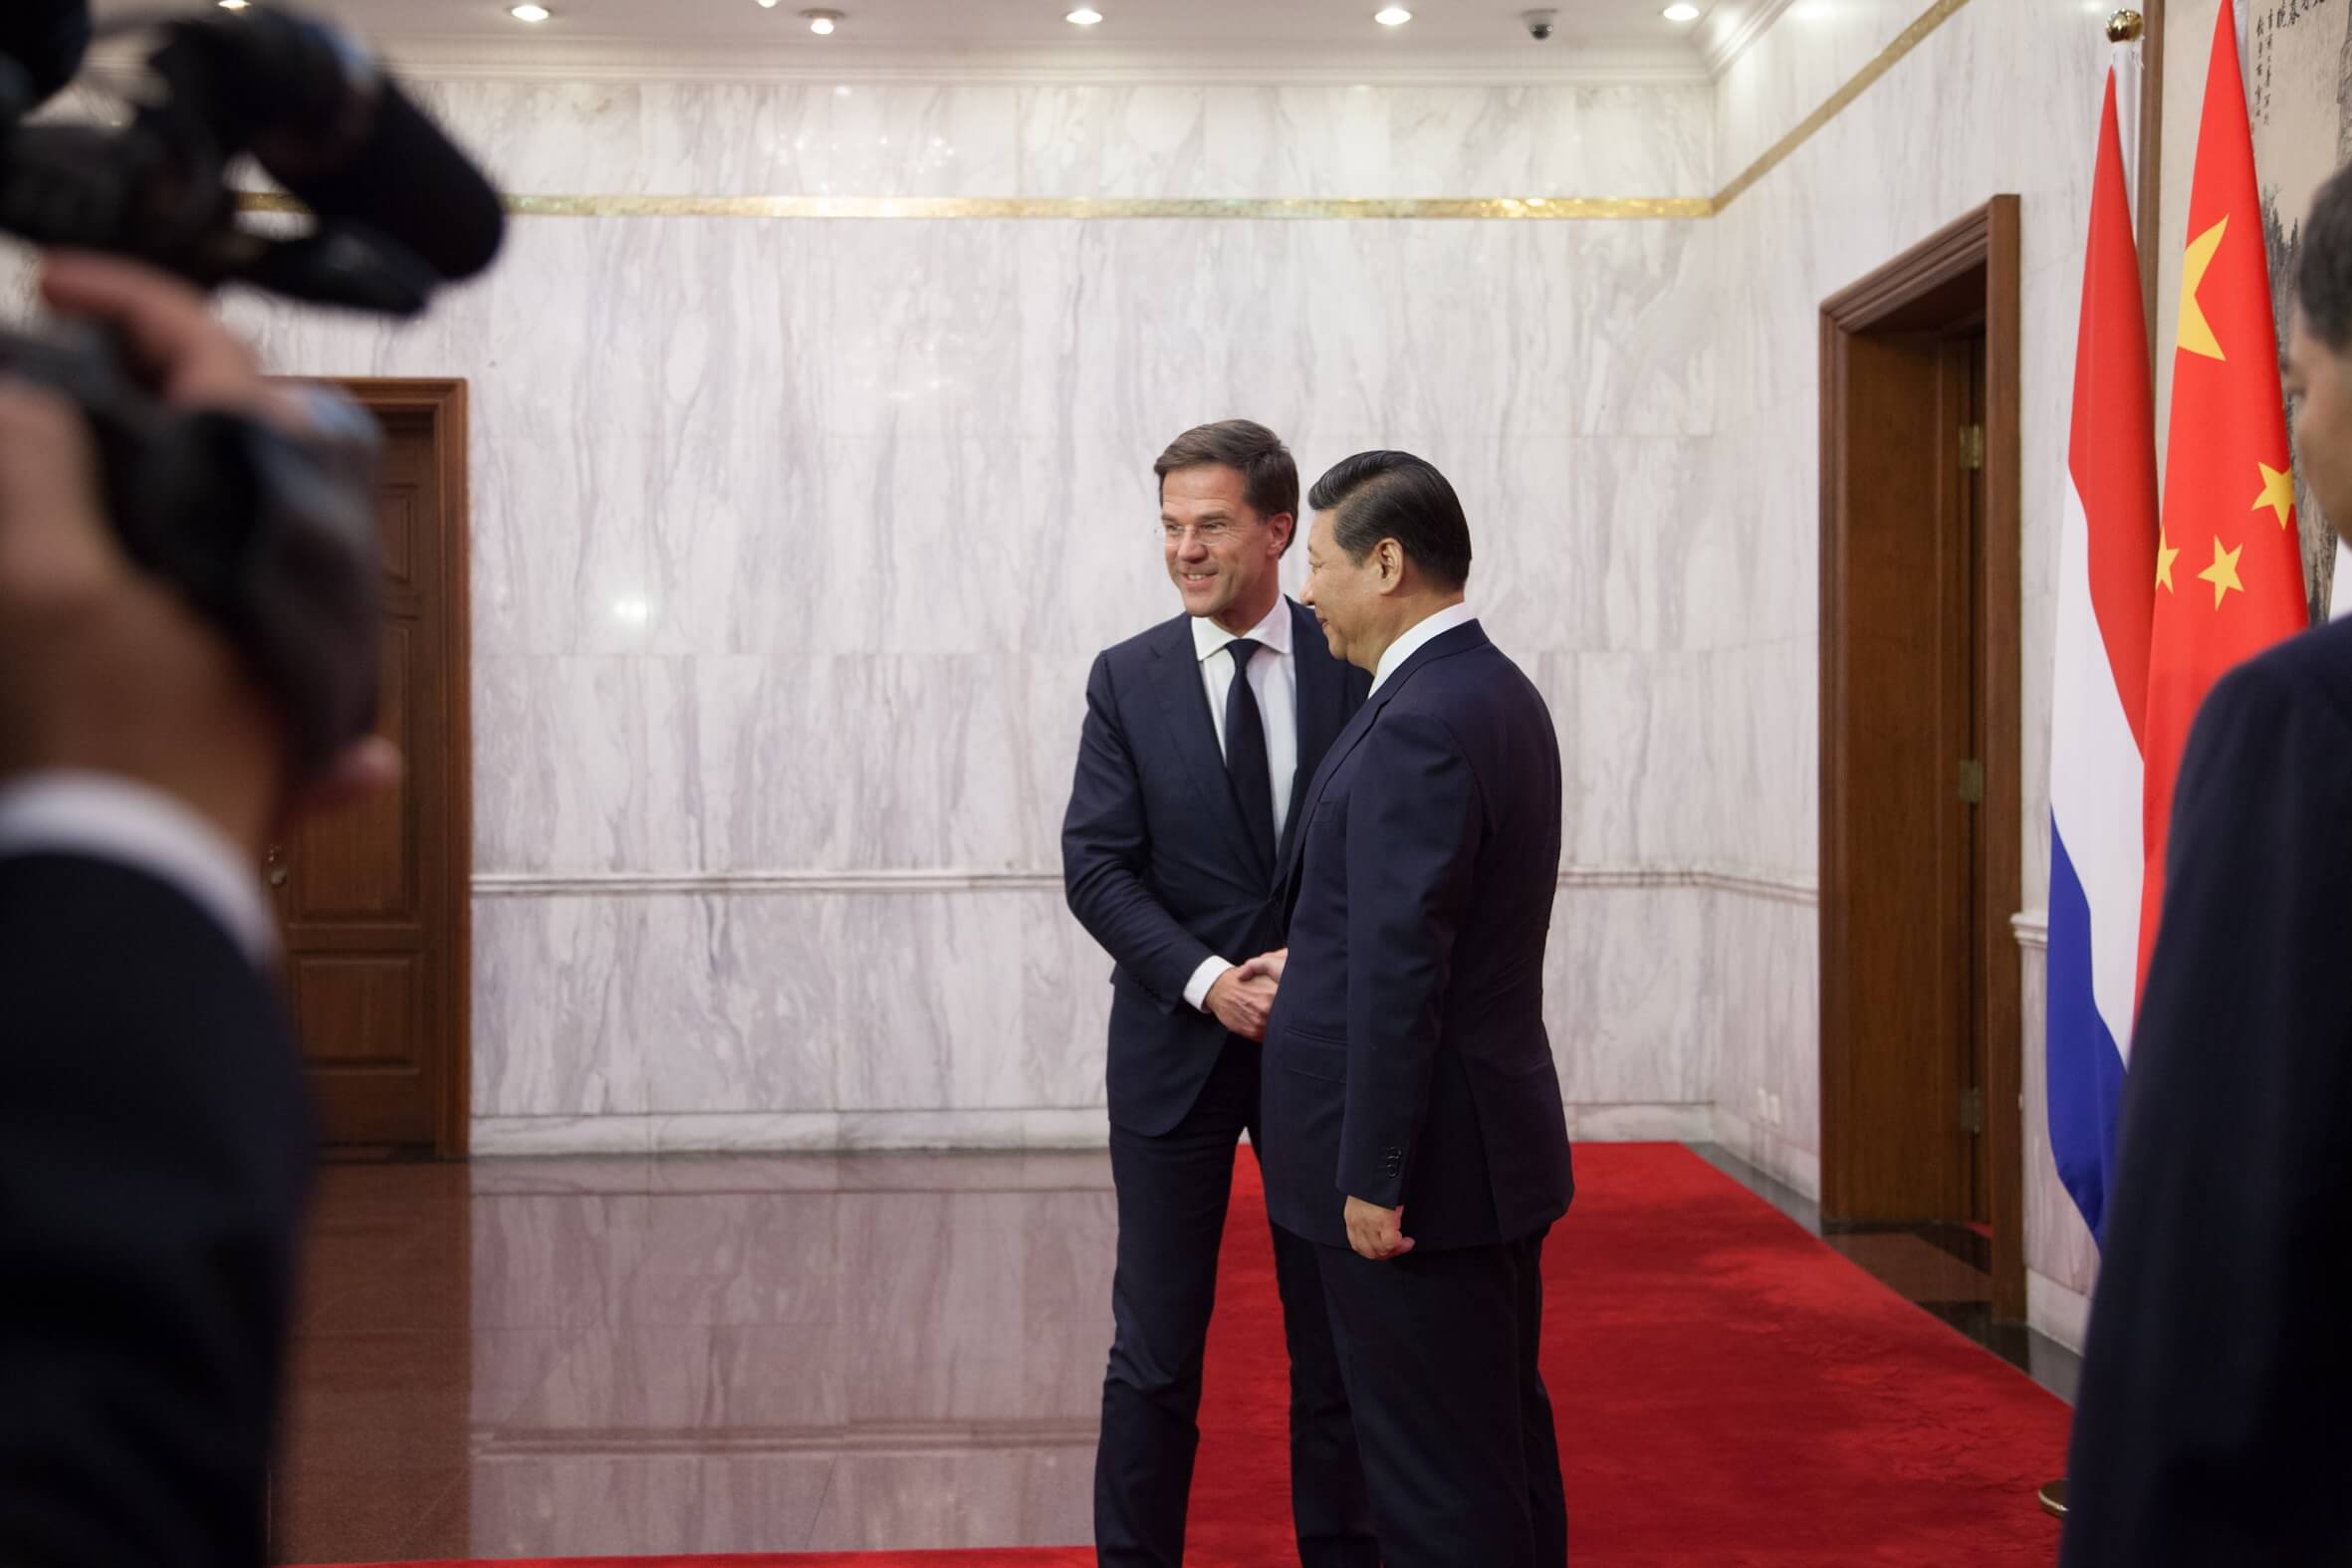 President Xi Jinping ontvangt minister-president Rutte tijdens een bezoek aan China in 2013 - Minister-president Rutte